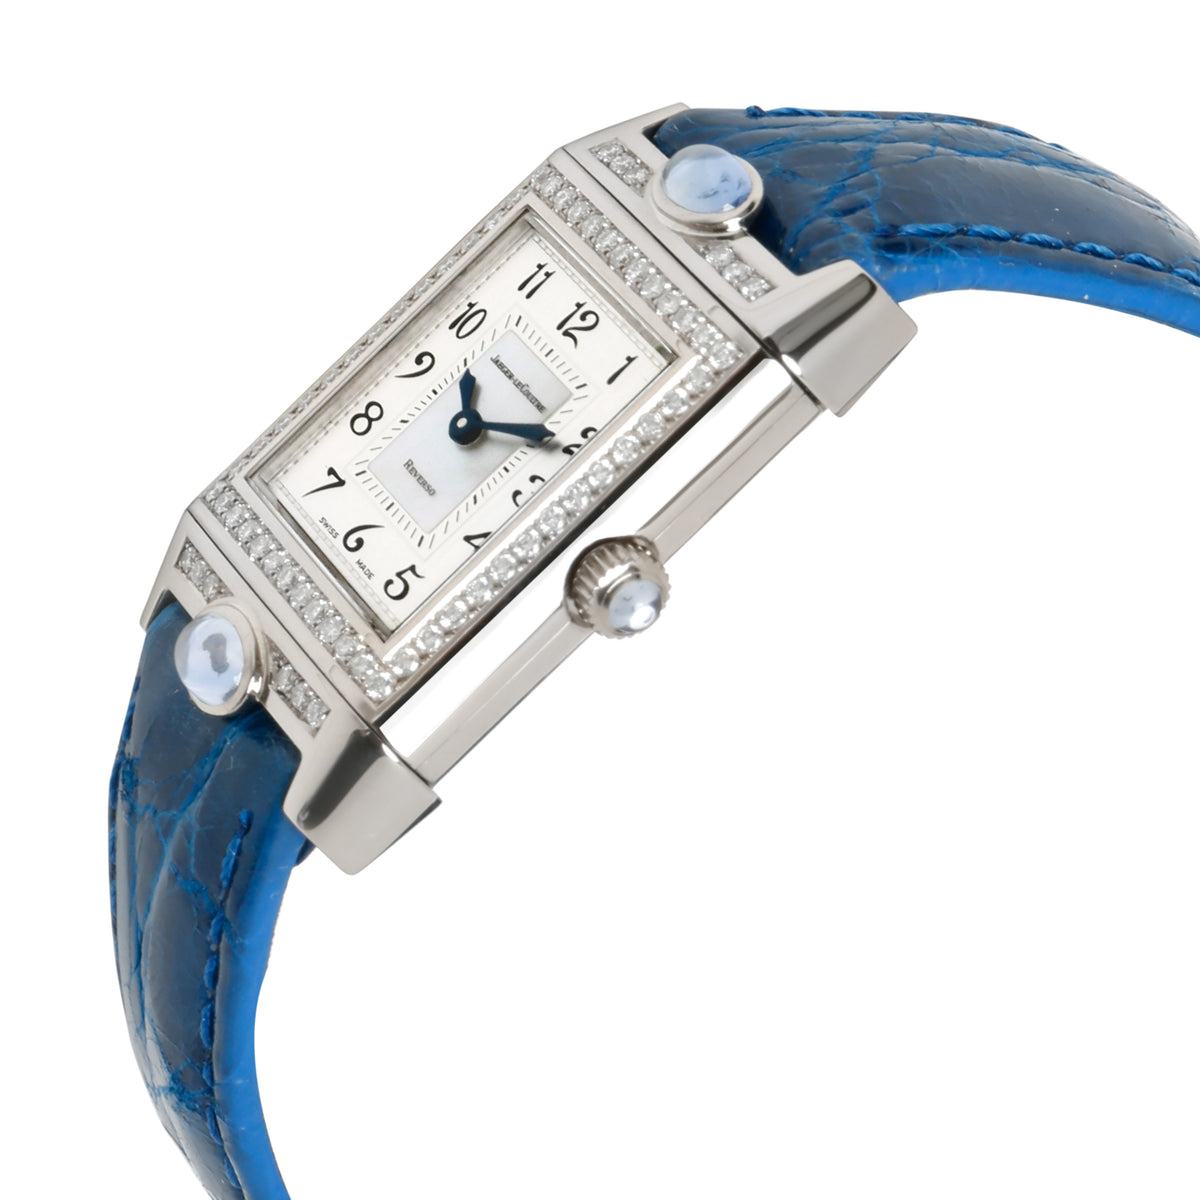 Jaeger-LeCoultre Reverso 267.346.001B Women's Watch in 18kt White Gold